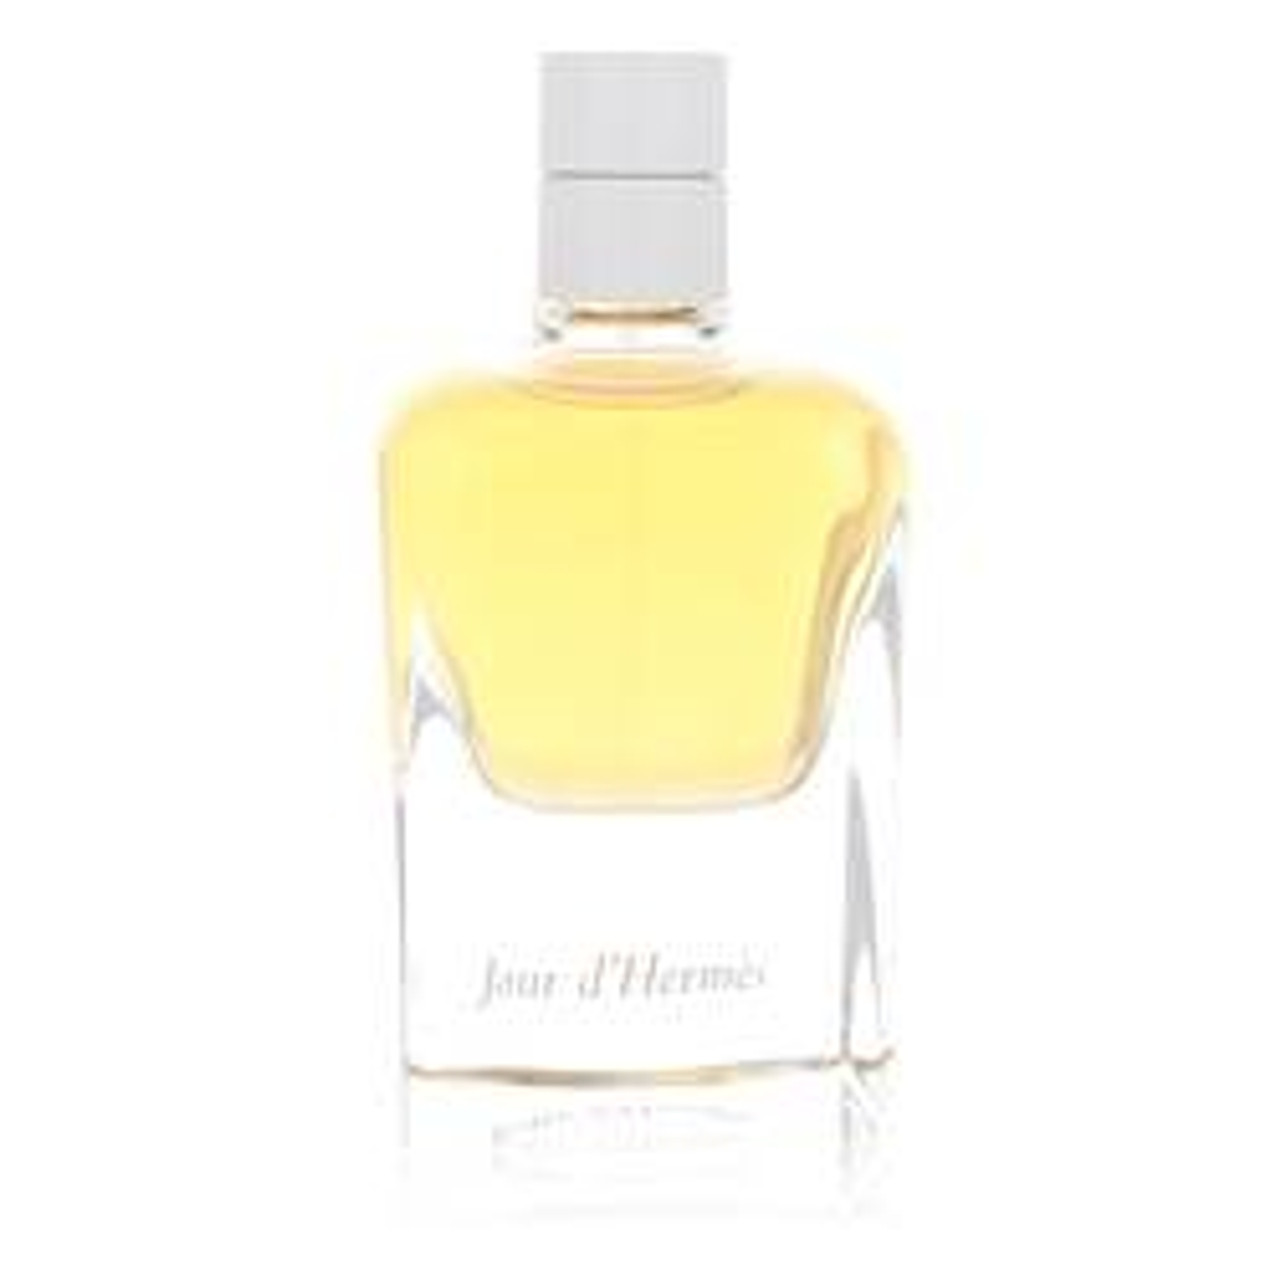 Jour D'hermes Perfume By Hermes Eau De Parfum Spray (Tester) 2.87 oz for Women - *Pre-Order